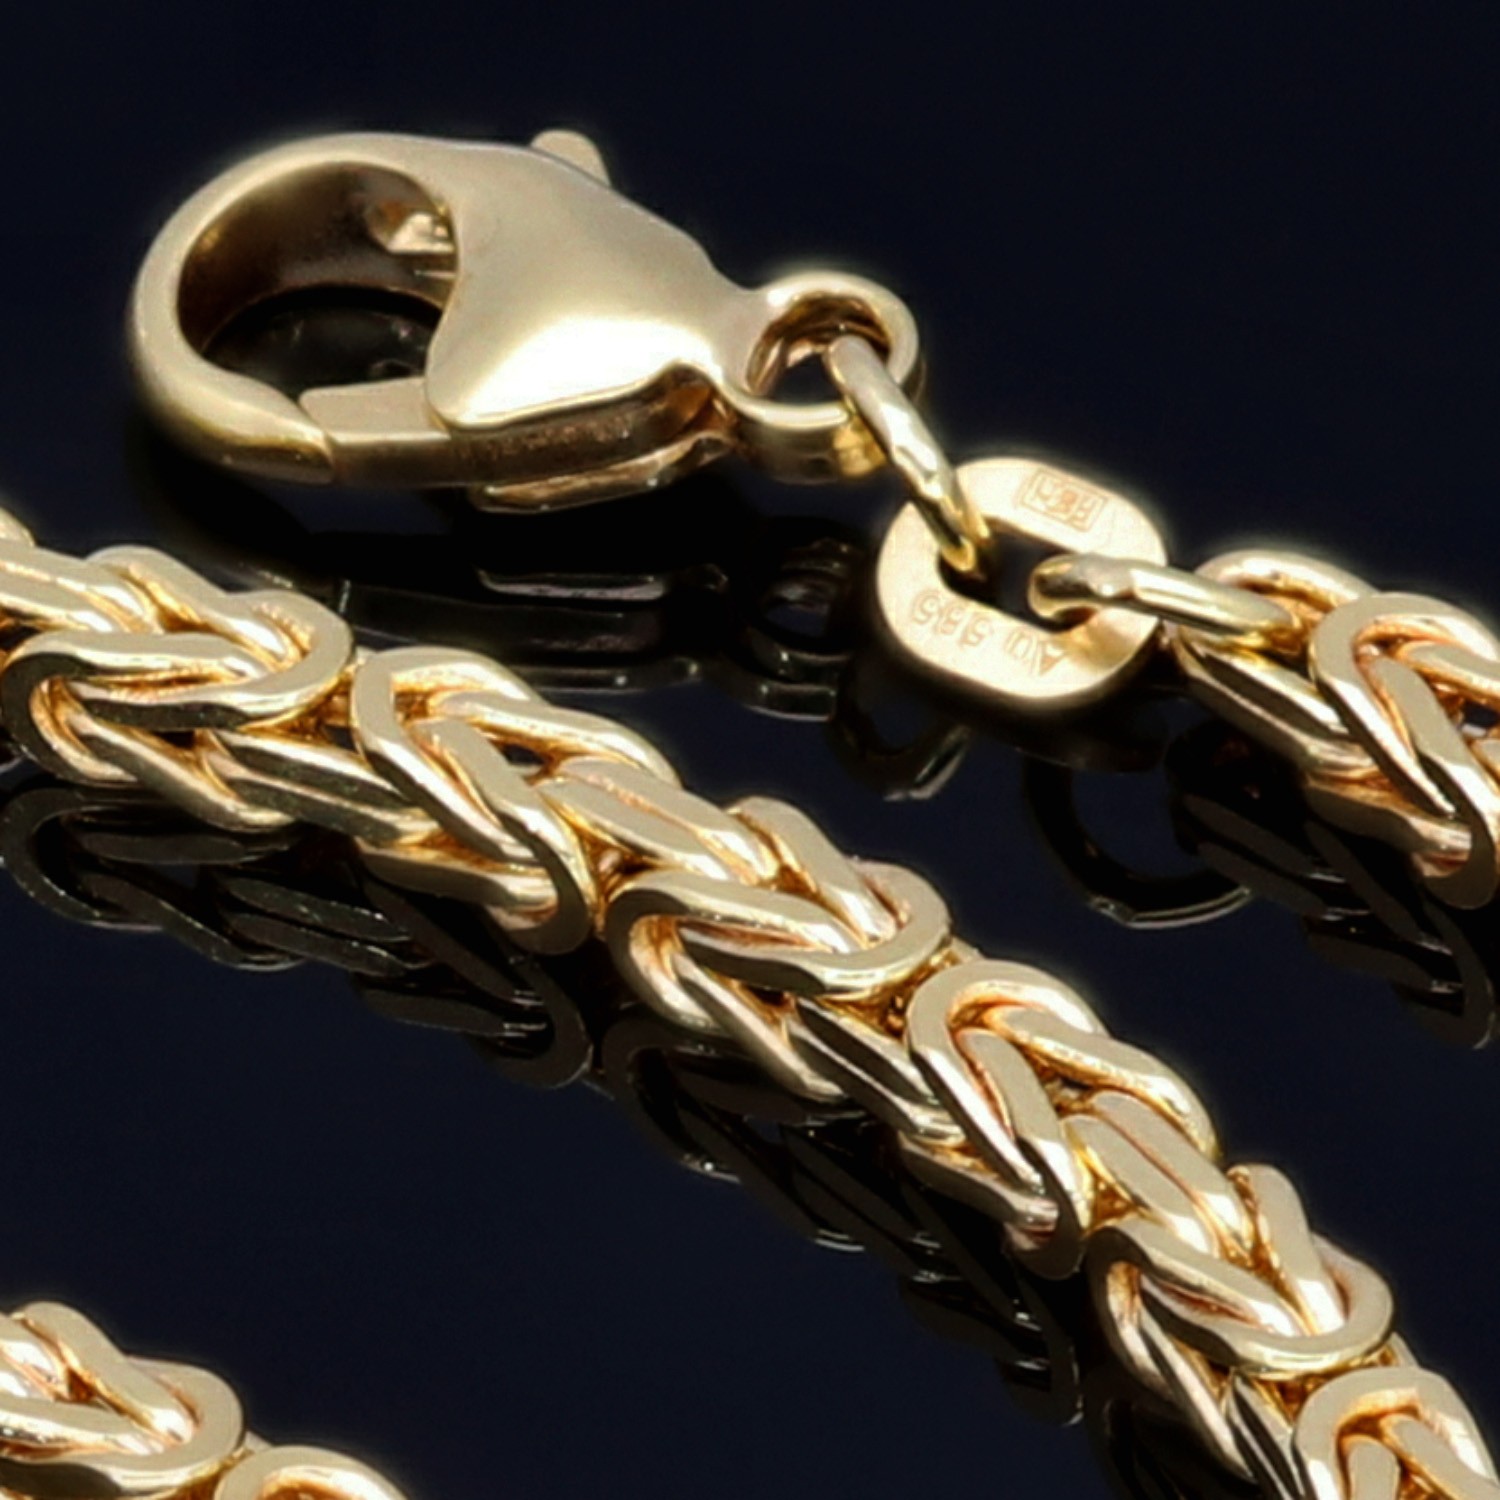 Königskette aus Gold 60cm 585 hochwertigem sensburg-aurum 2,5mm, - (14K)